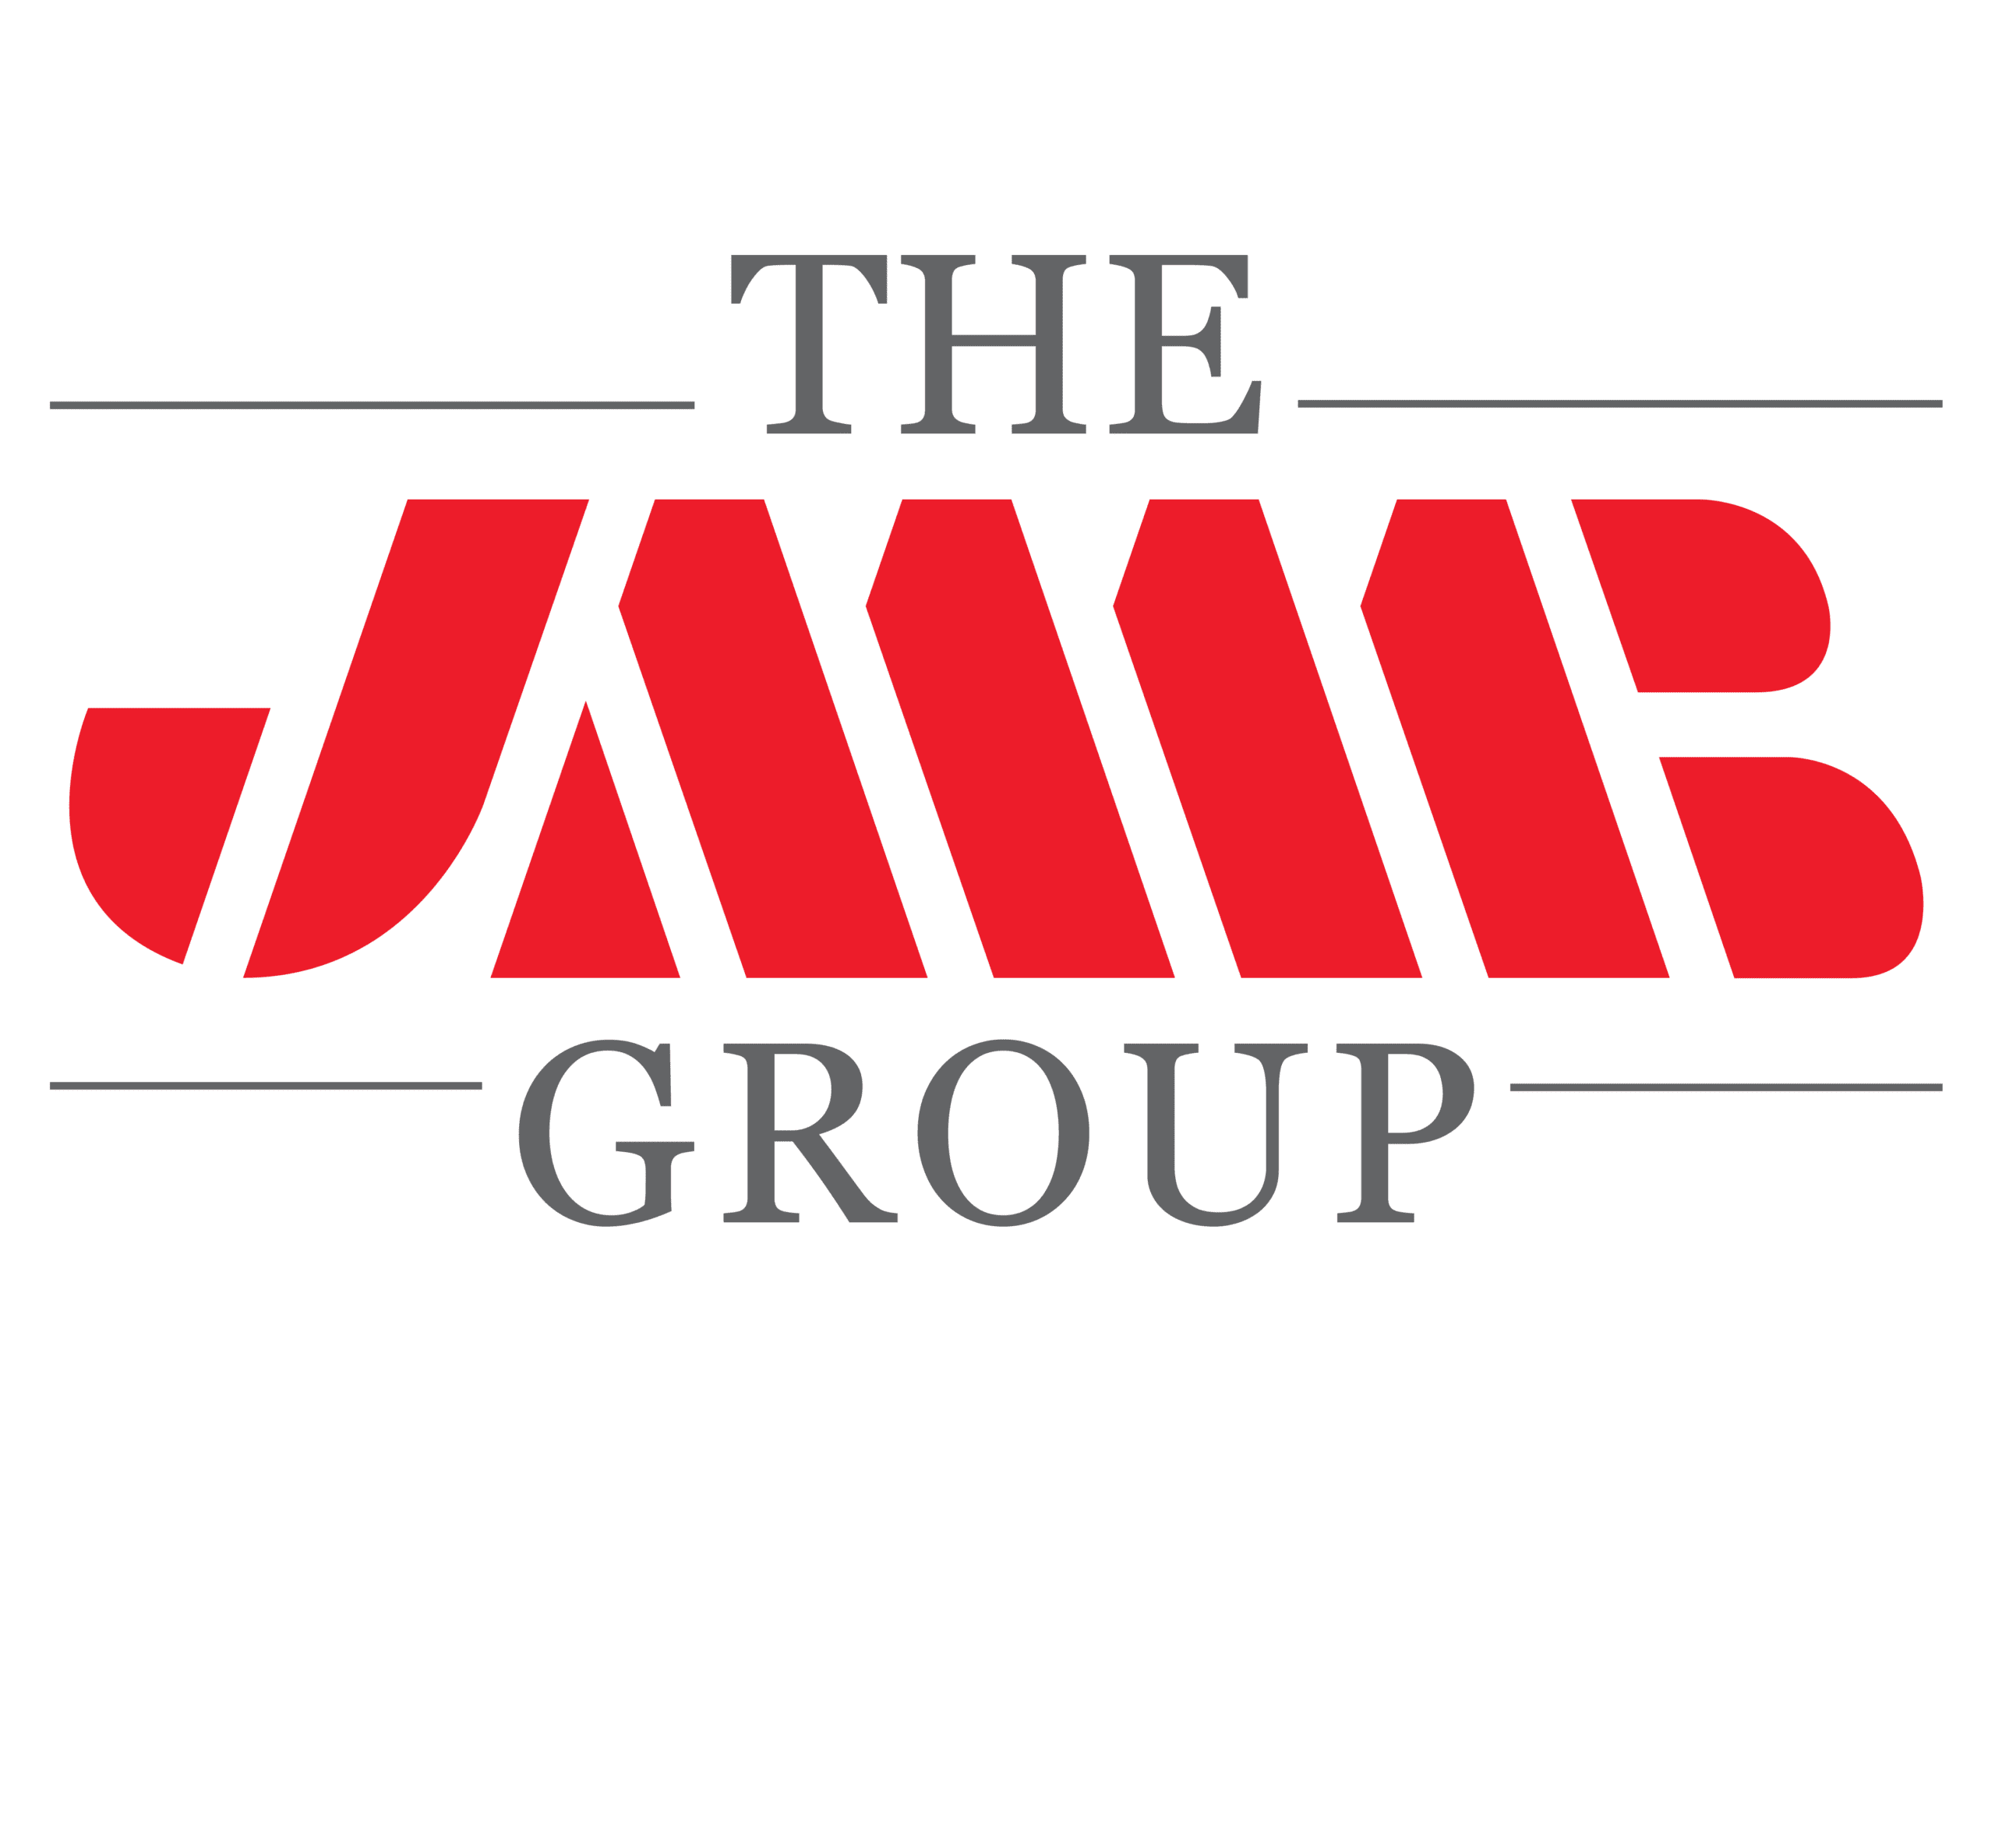 The JMMB Group